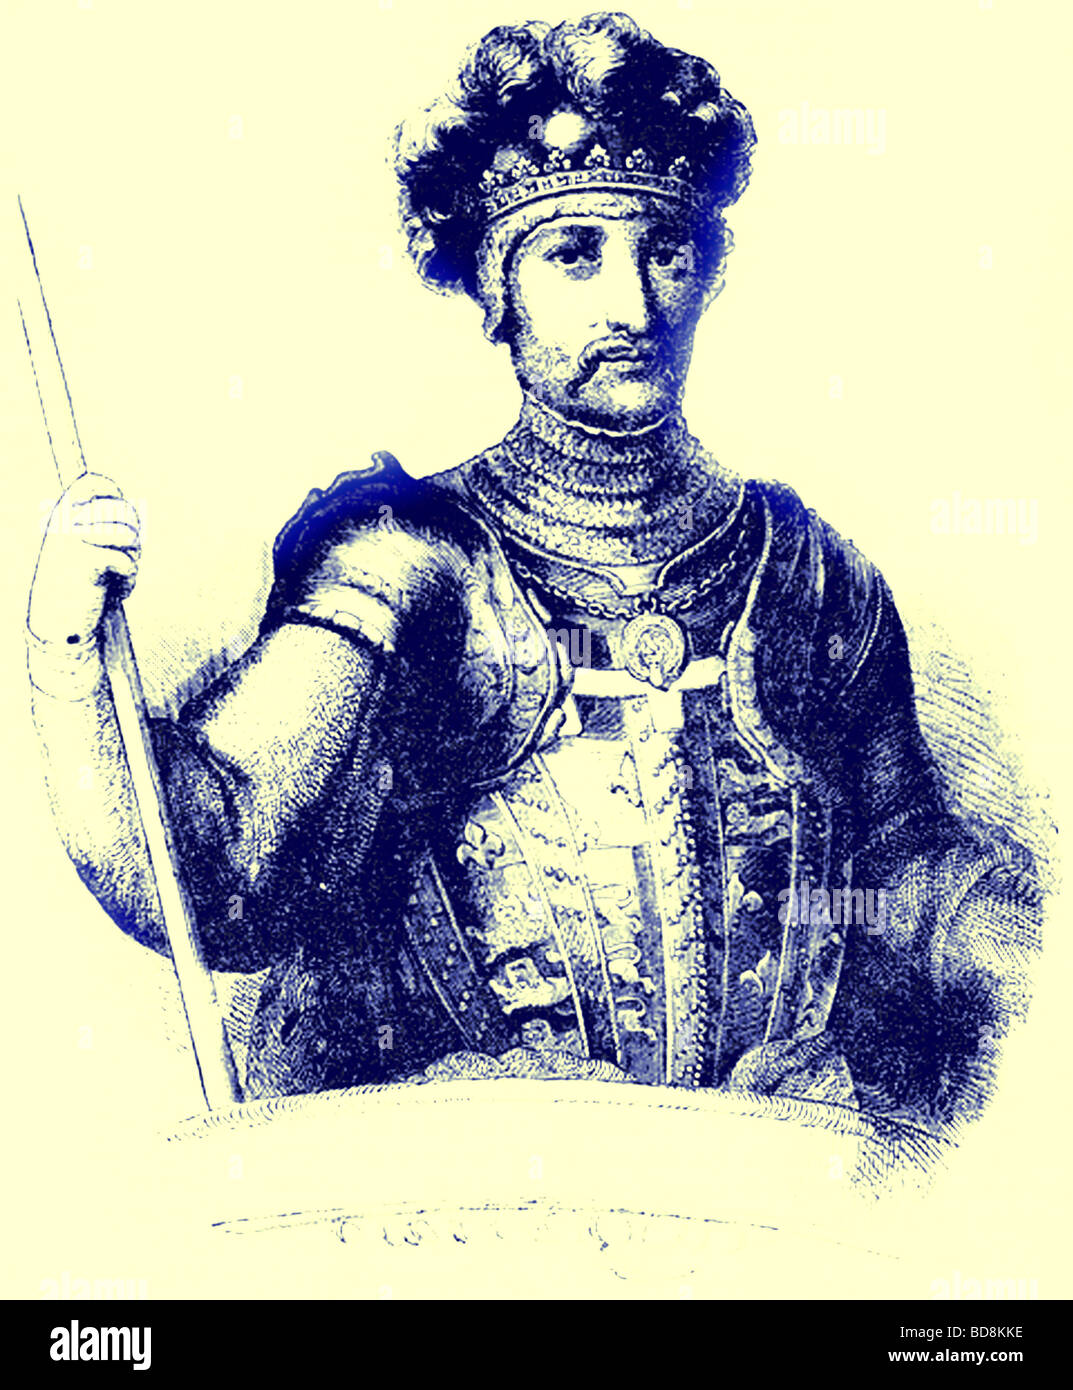 RBH Biography: Edward the Black Prince (1330-1376)